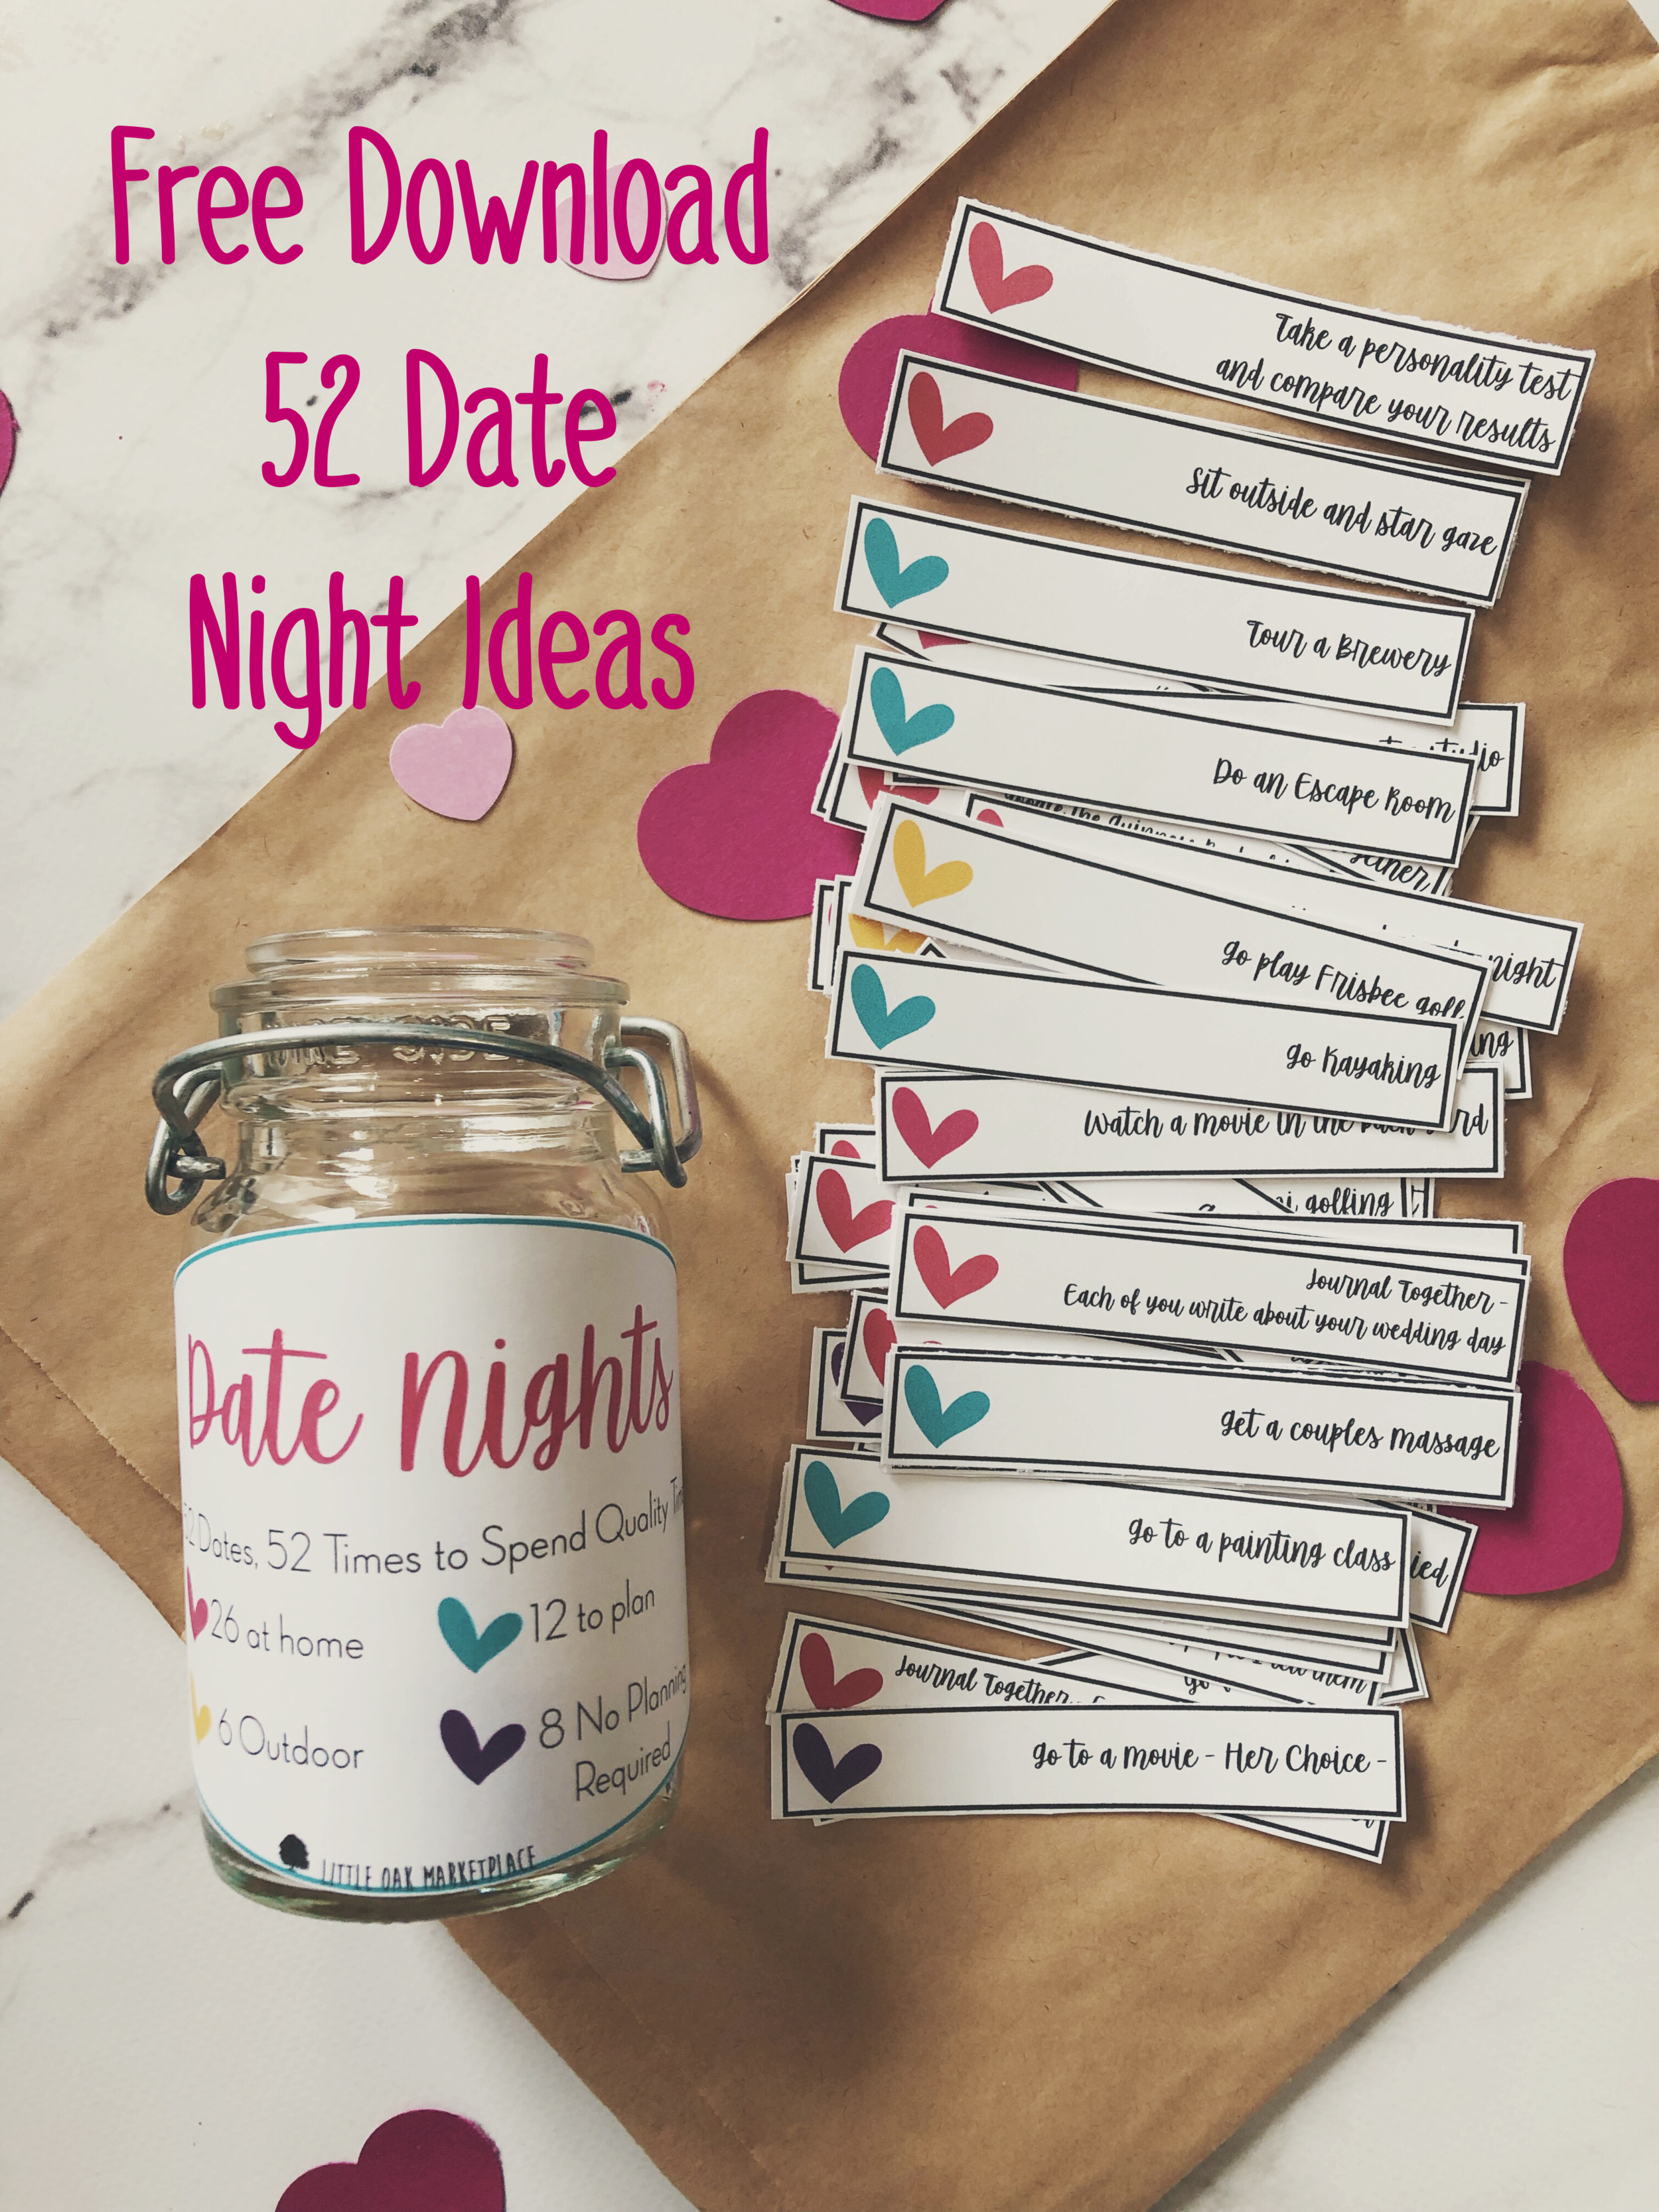 At Home Date Night Ideas -   Date night jar, Romantic date night ideas,  Date night